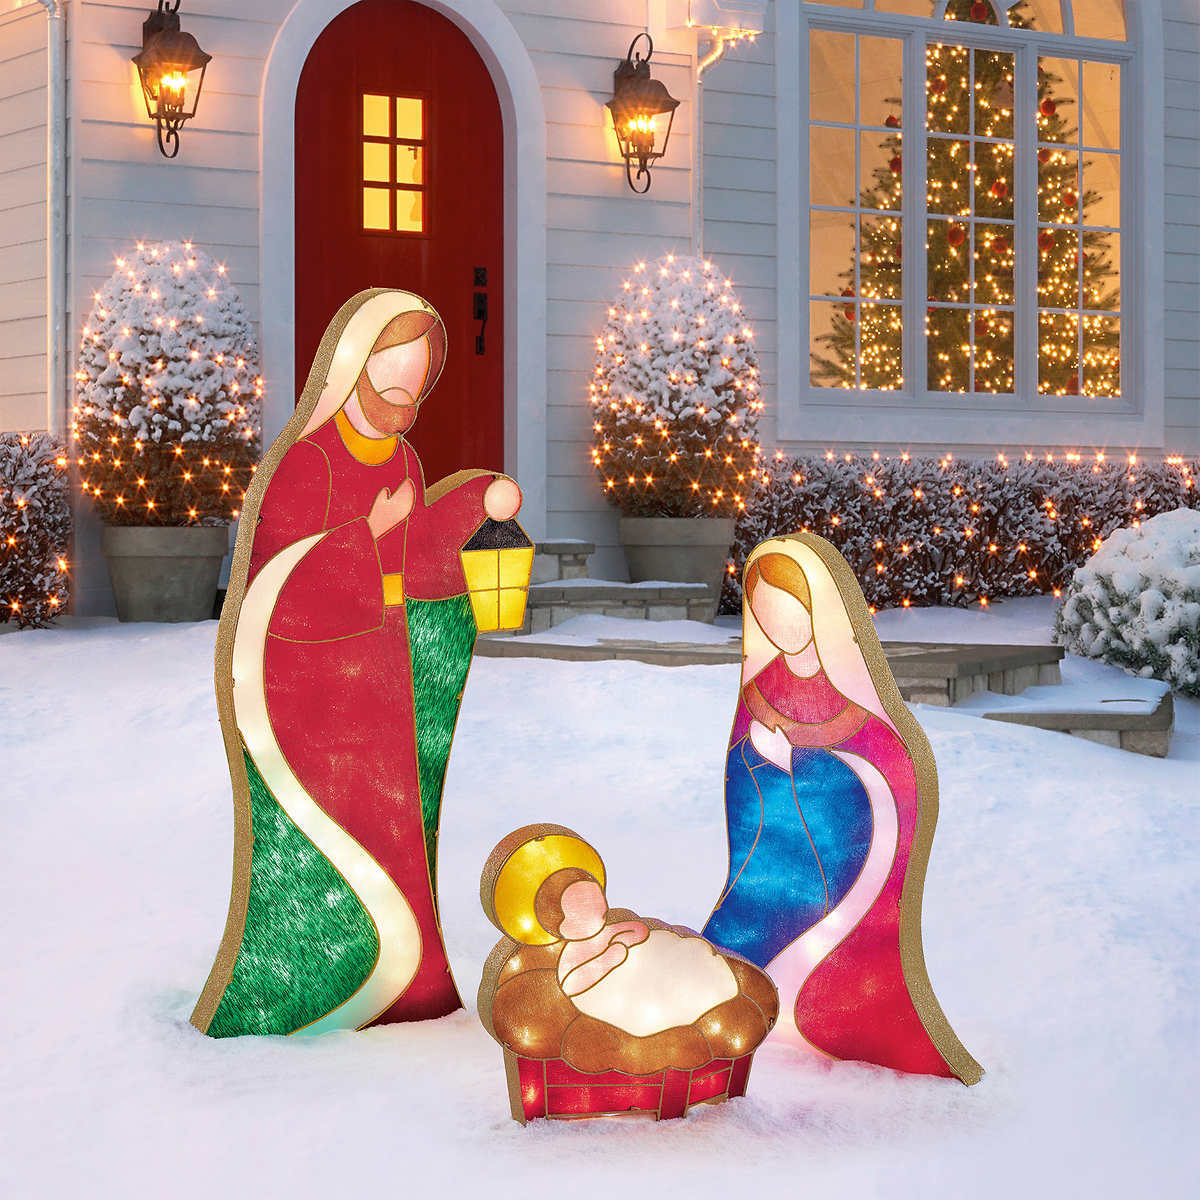 Life Size Lighted Outdoor Nativity Scene - Outdoor Lighting Ideas